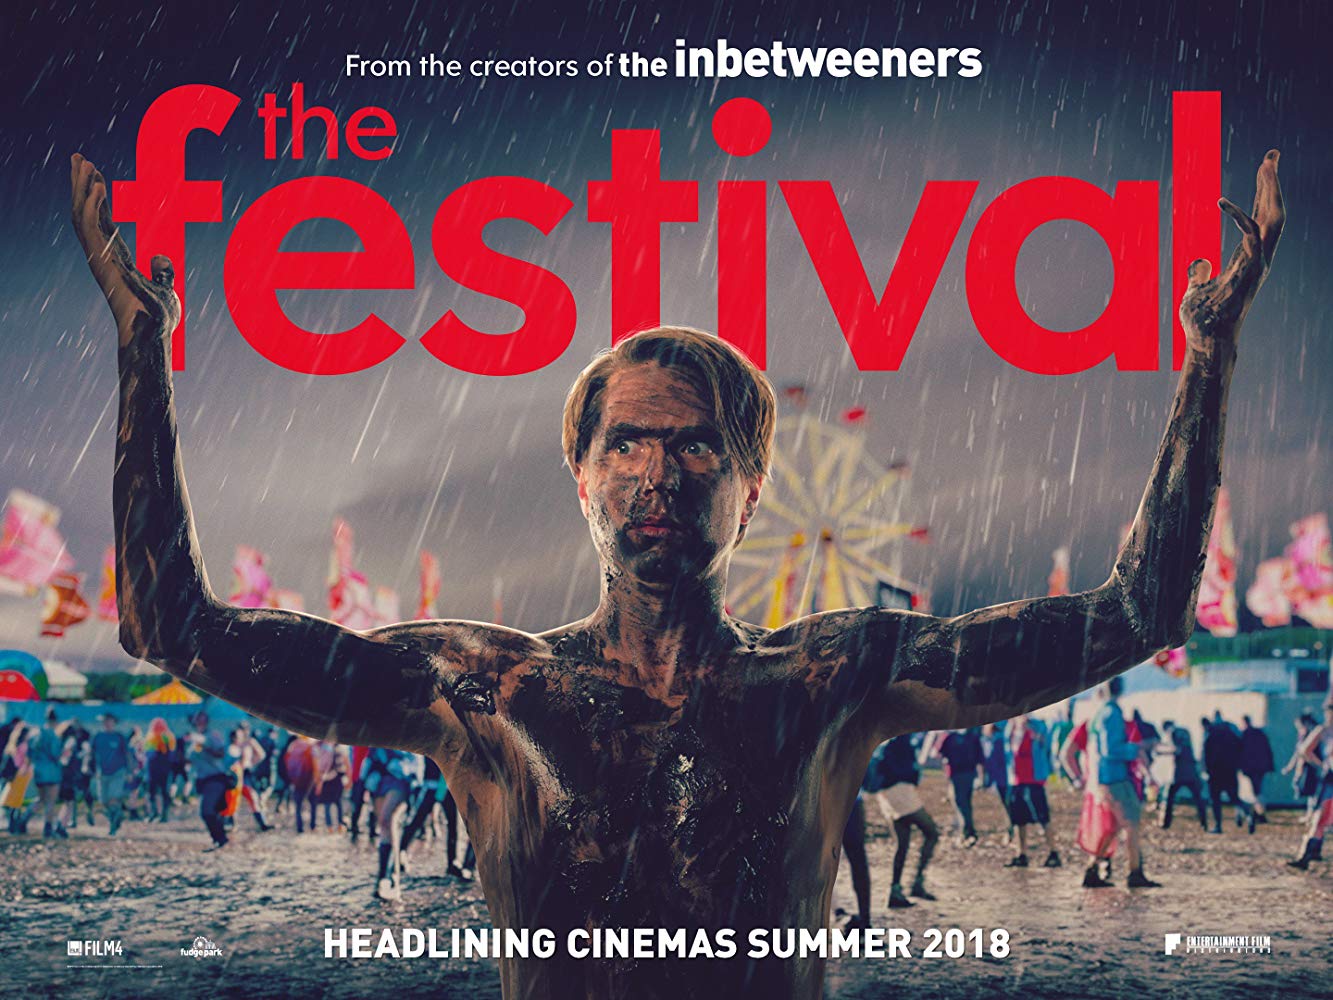 The Festival (2018)